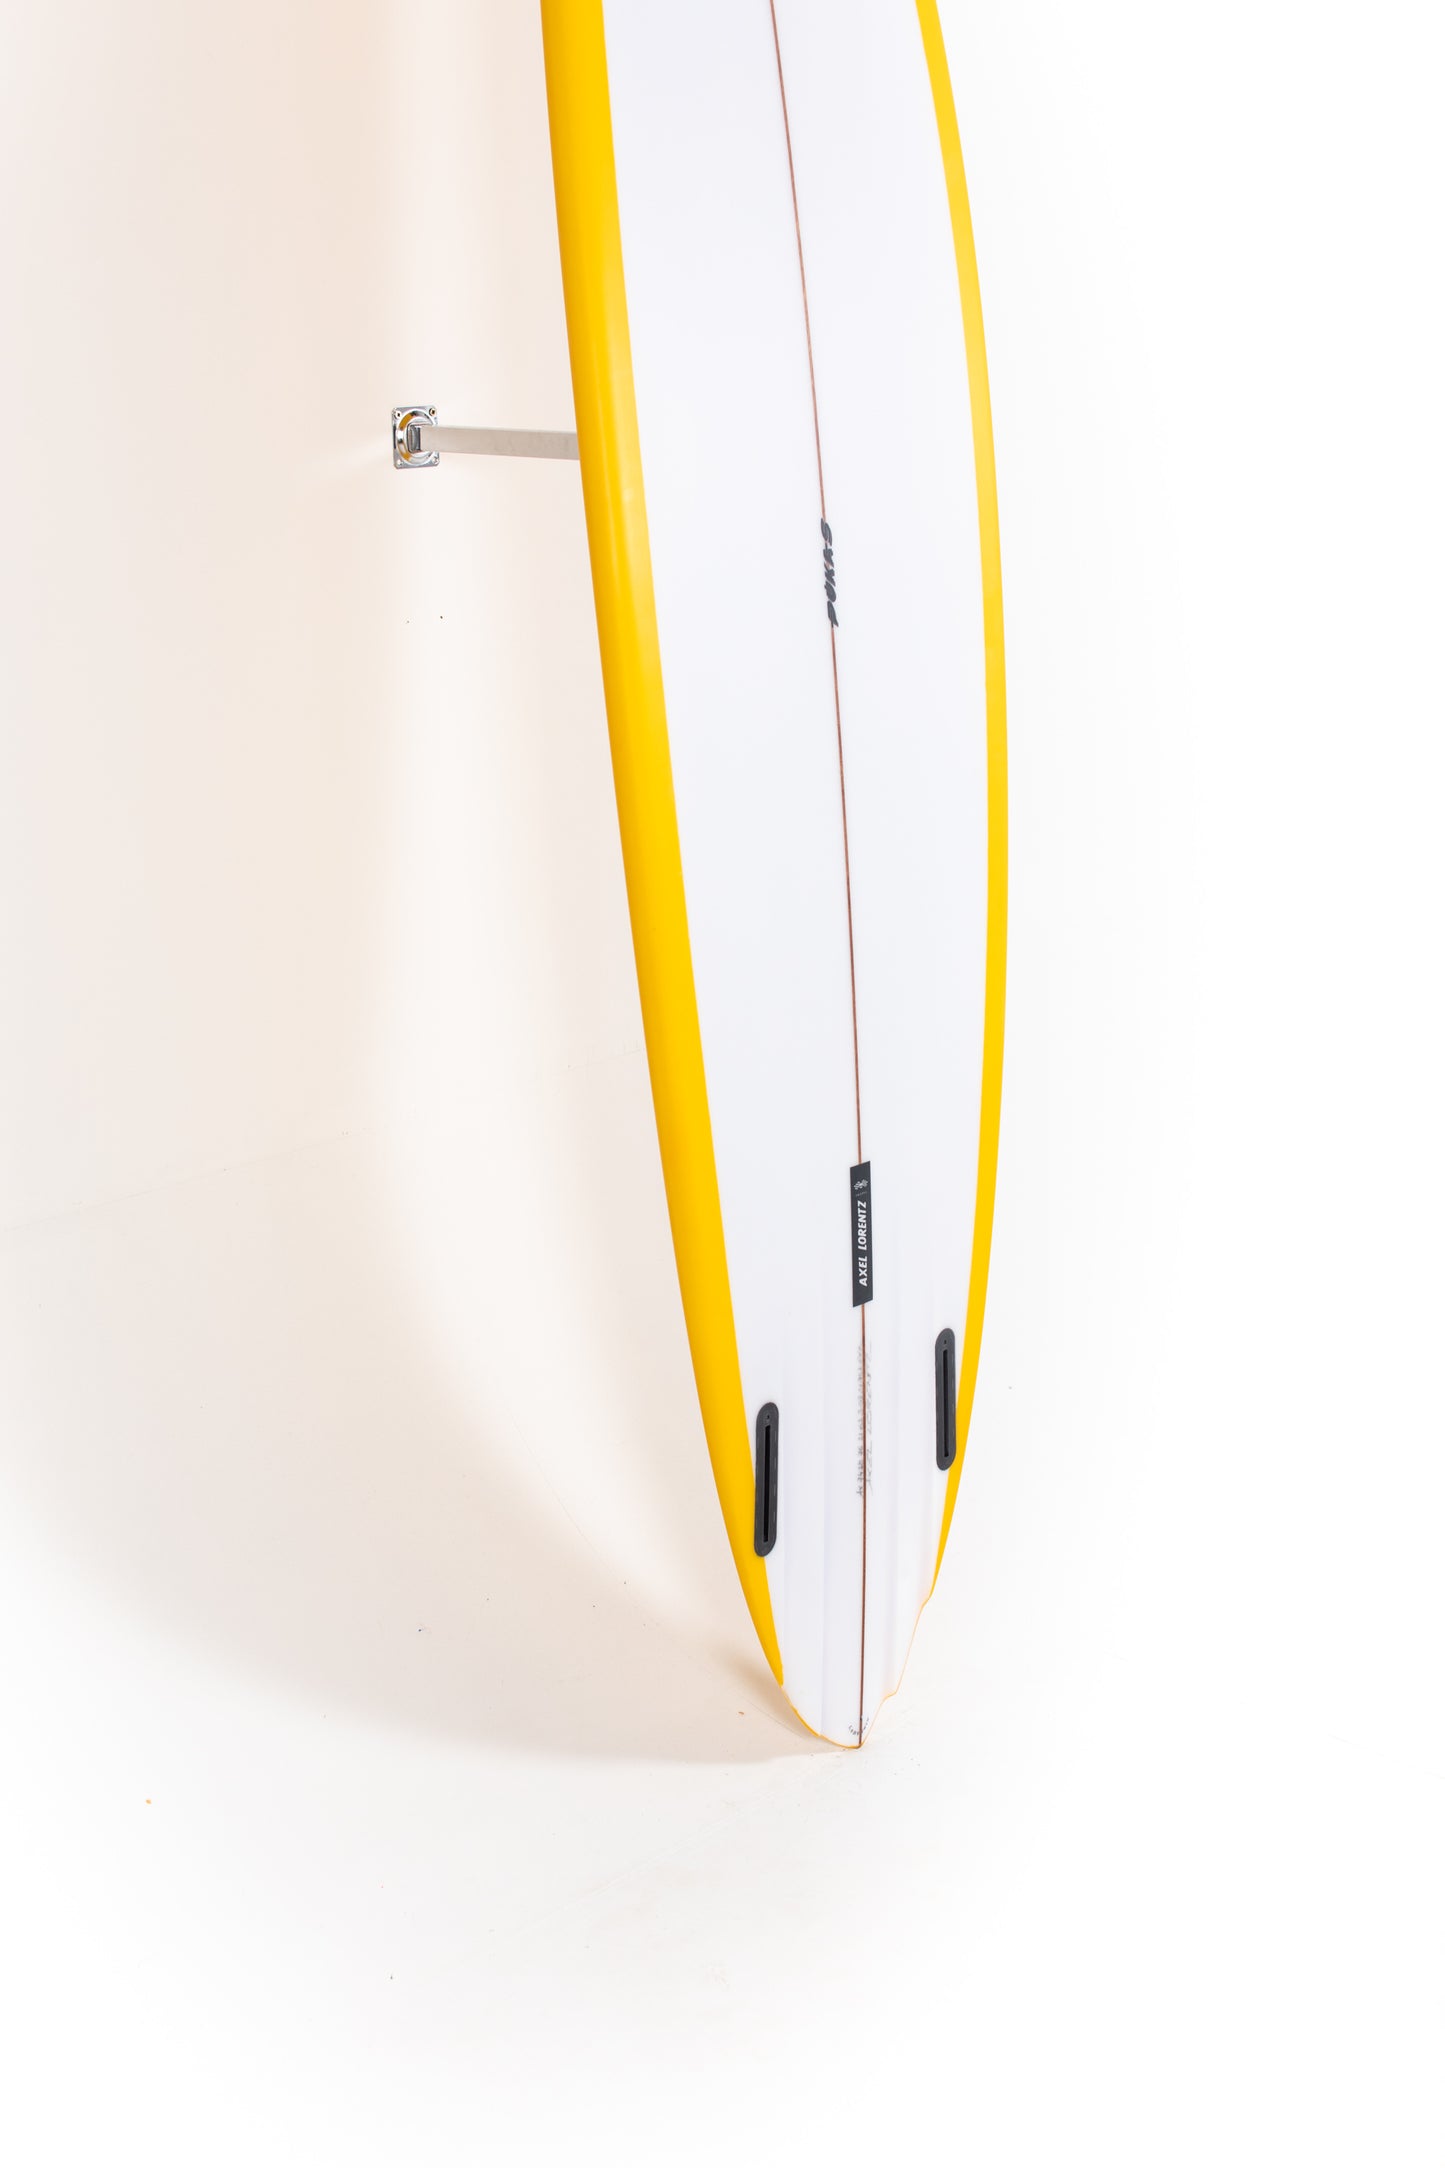 
                  
                    Pukas Surf Shop - Pukas Surfboard - LADY TWIN by Axel Lorentz - 7’6” x 21,63 x 3,03 - 51,76L - AX07428
                  
                